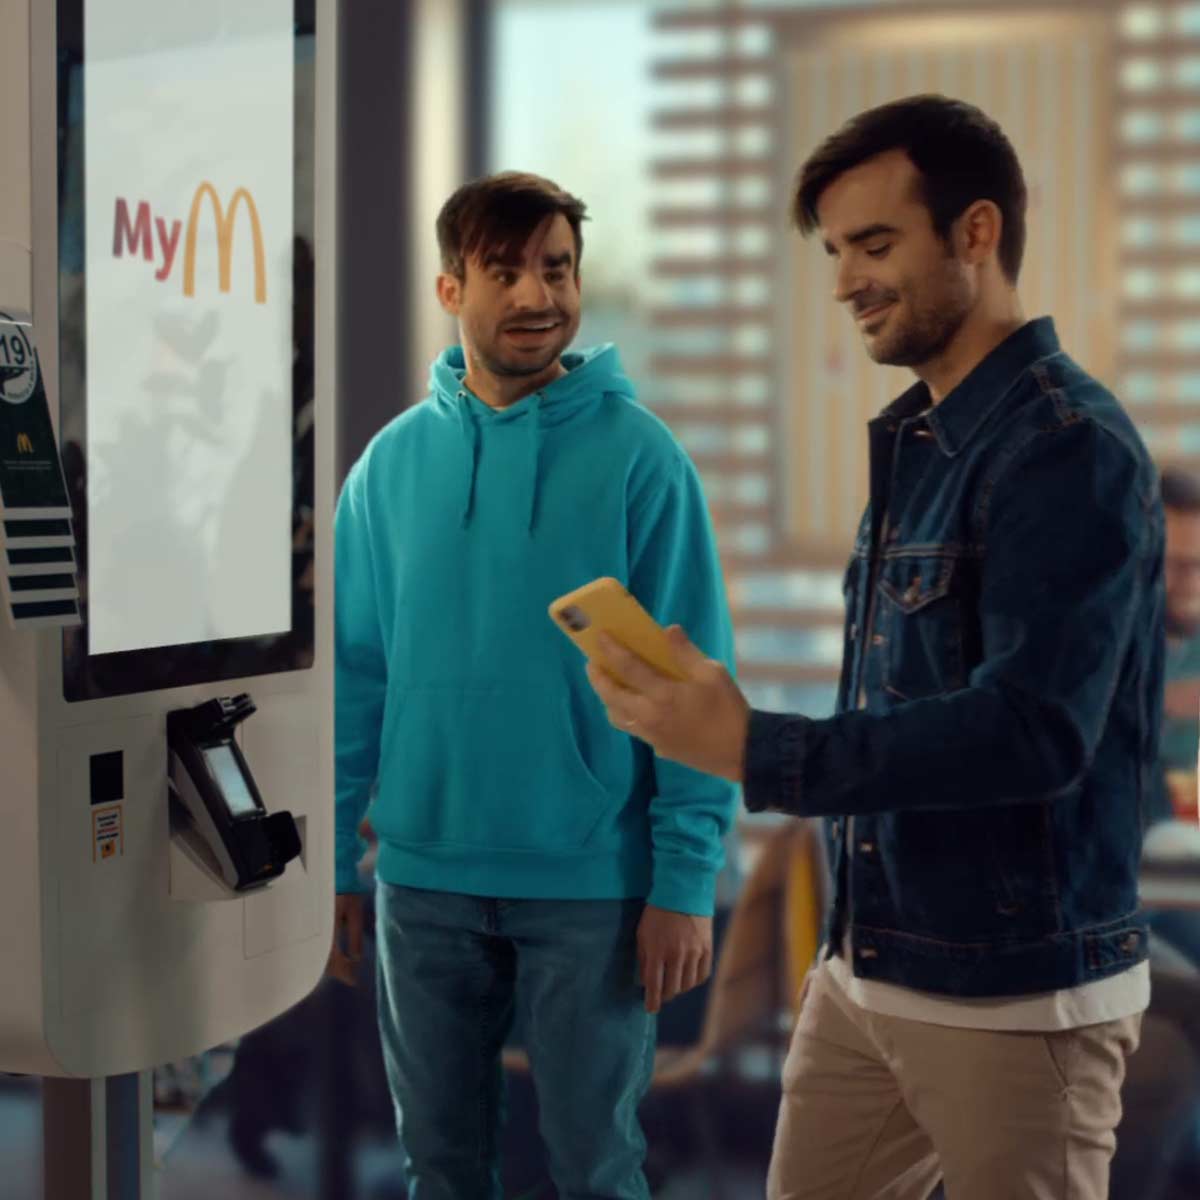 McDonalds · MyApp Nachter · 06